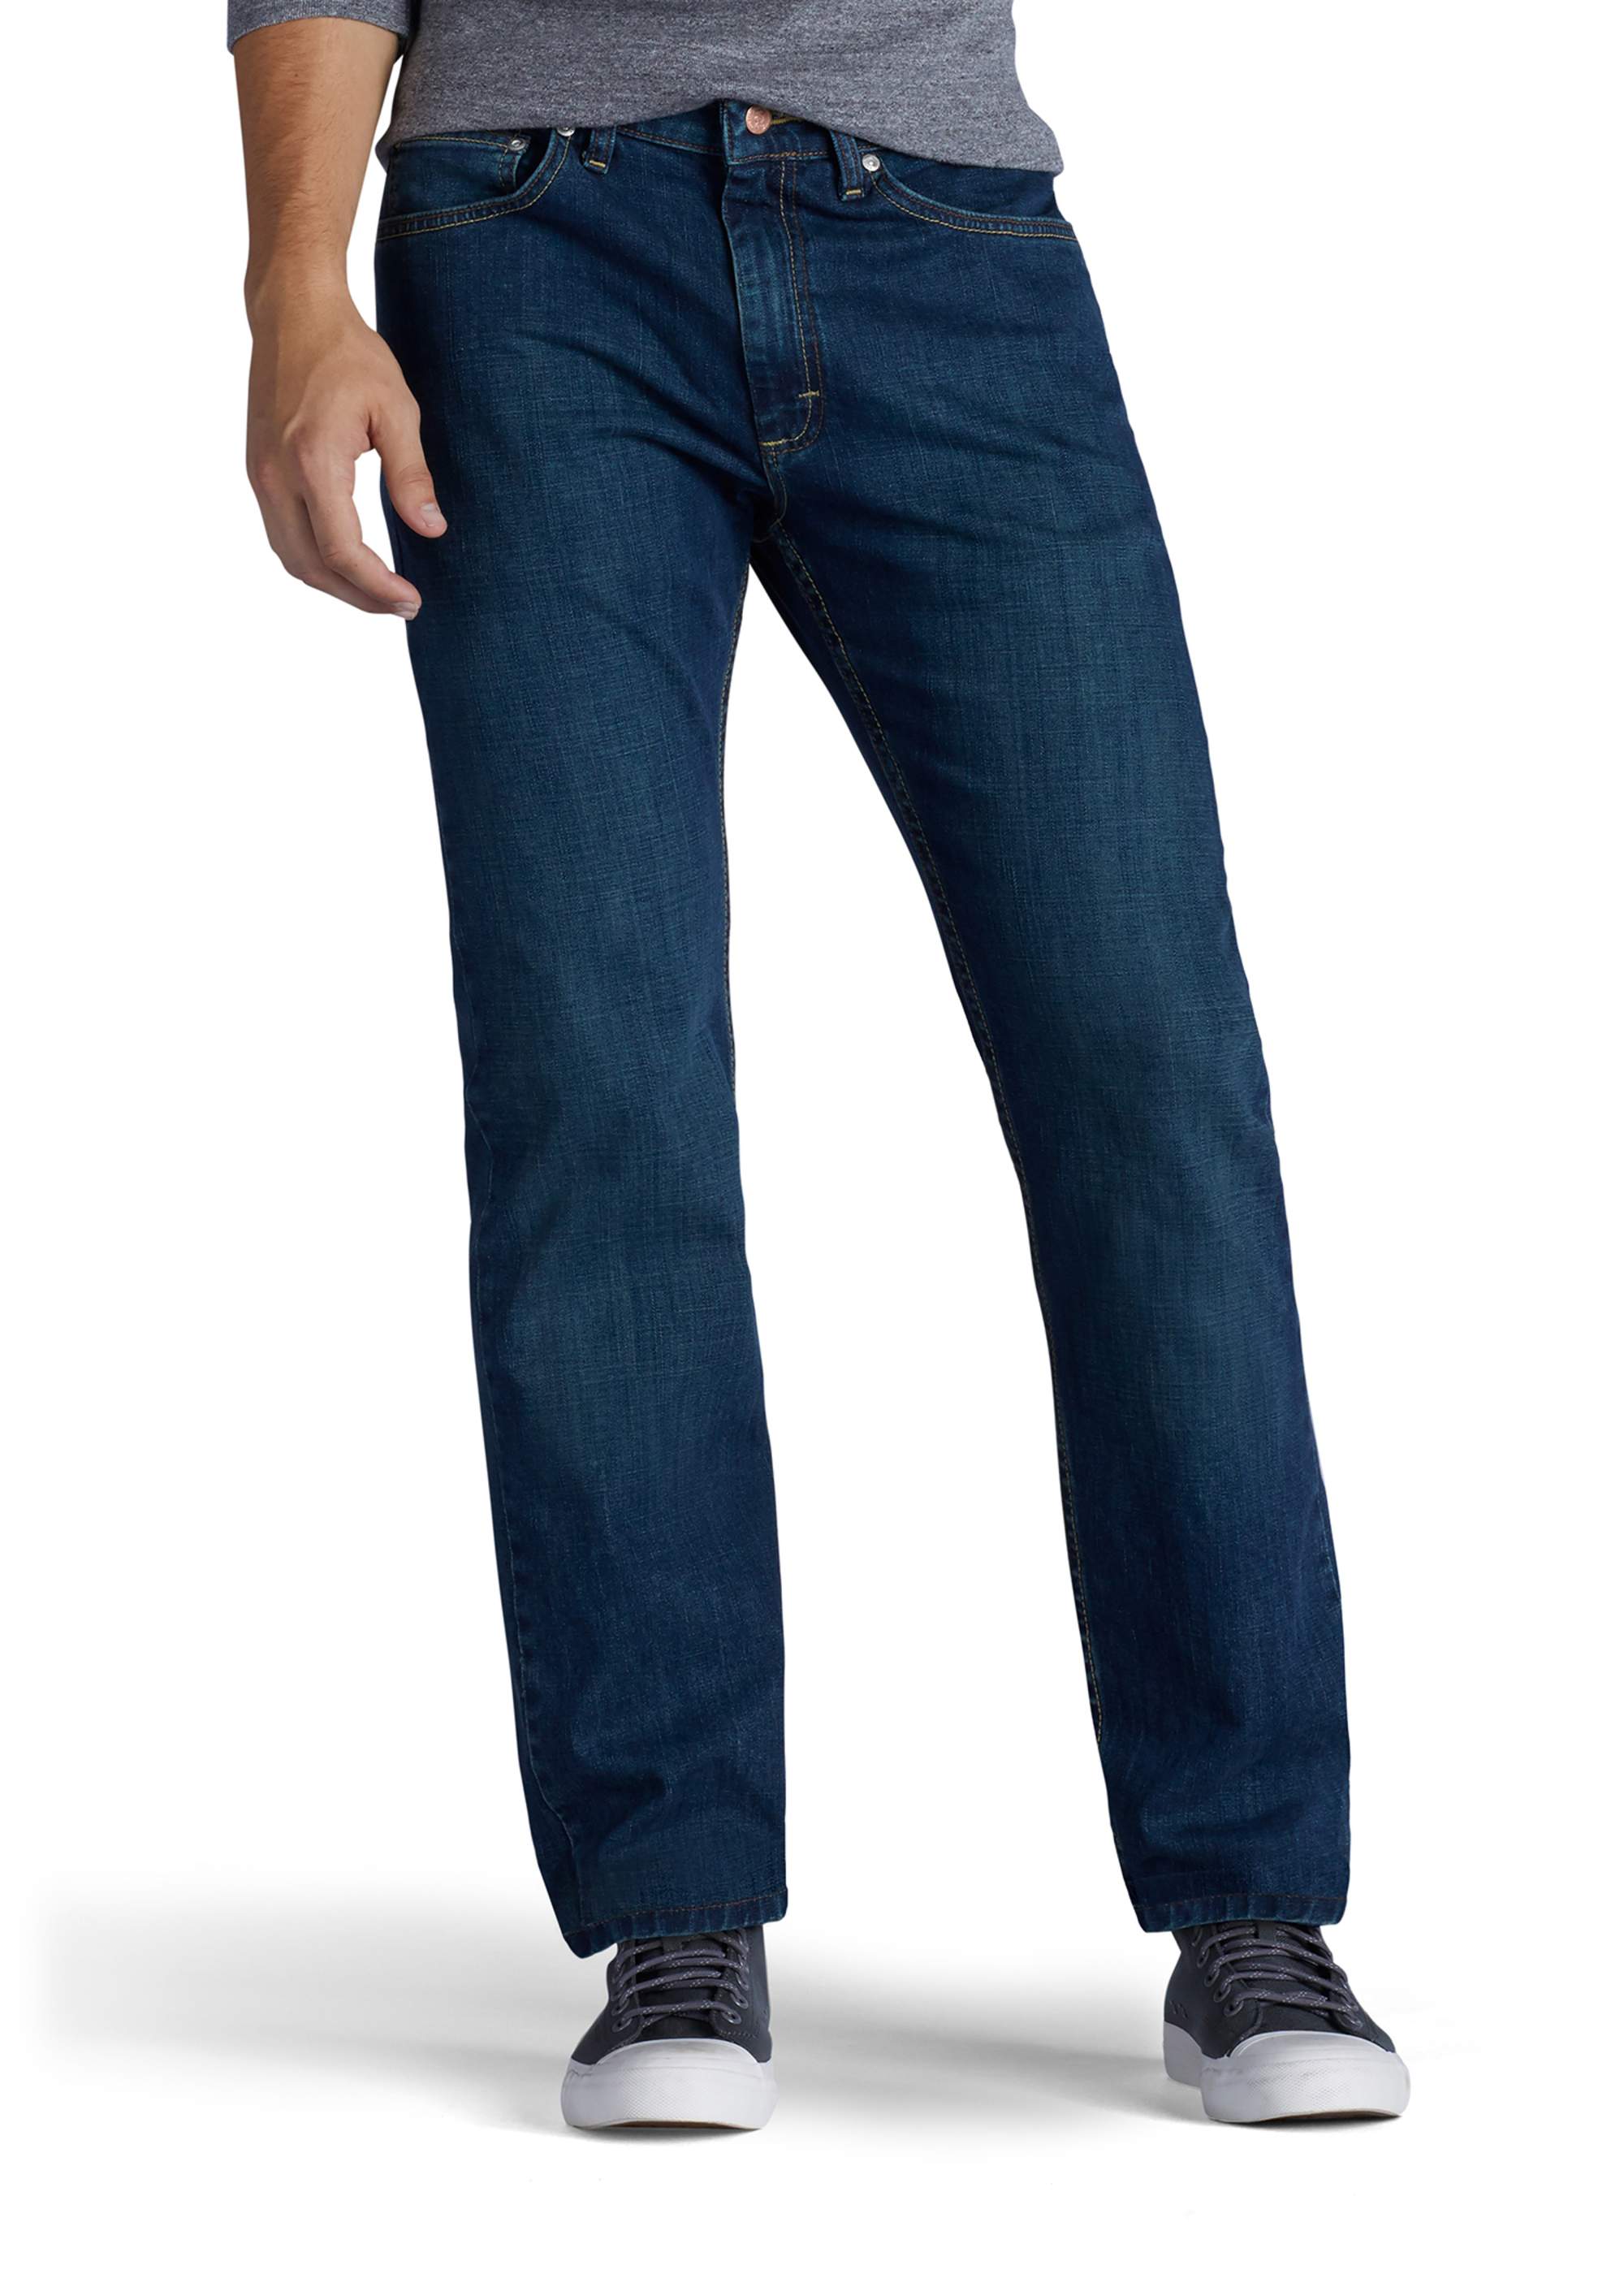 Lee Men's Premium Select Classic Fit Jeans - image 1 of 4